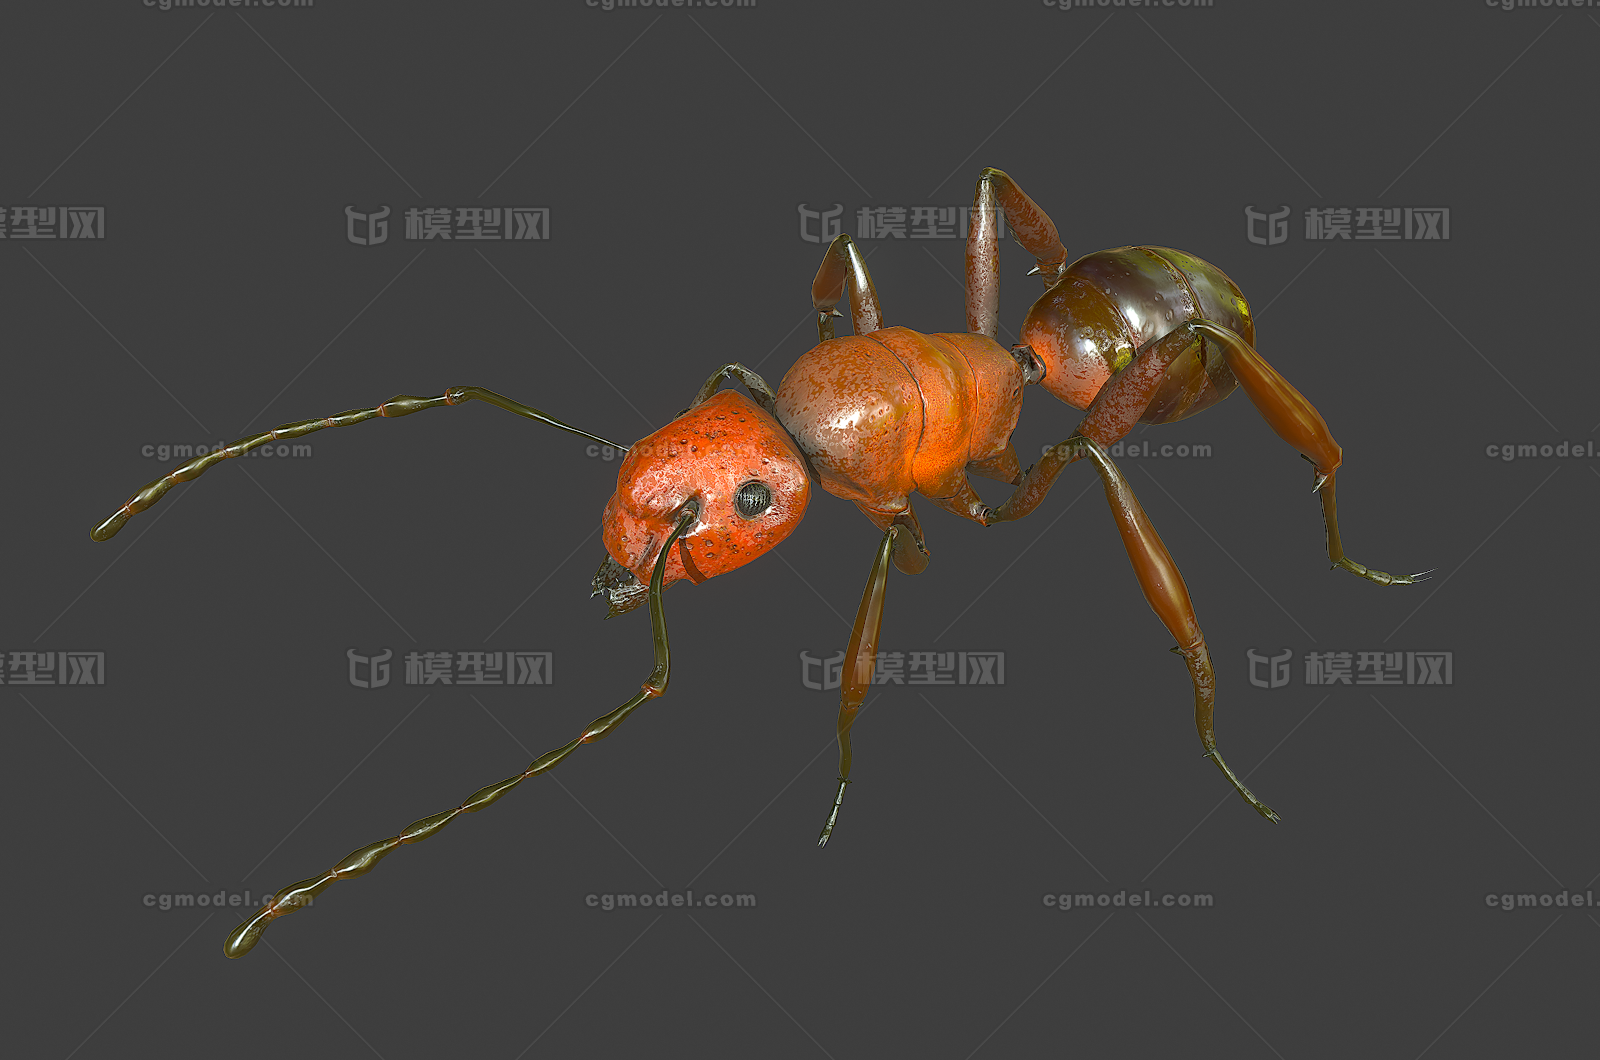 118 pbr次世代 蚂蚁 工蚁 雄蚁 兵蚁 蚁巢 节肢动物 昆虫 虫子 次时代